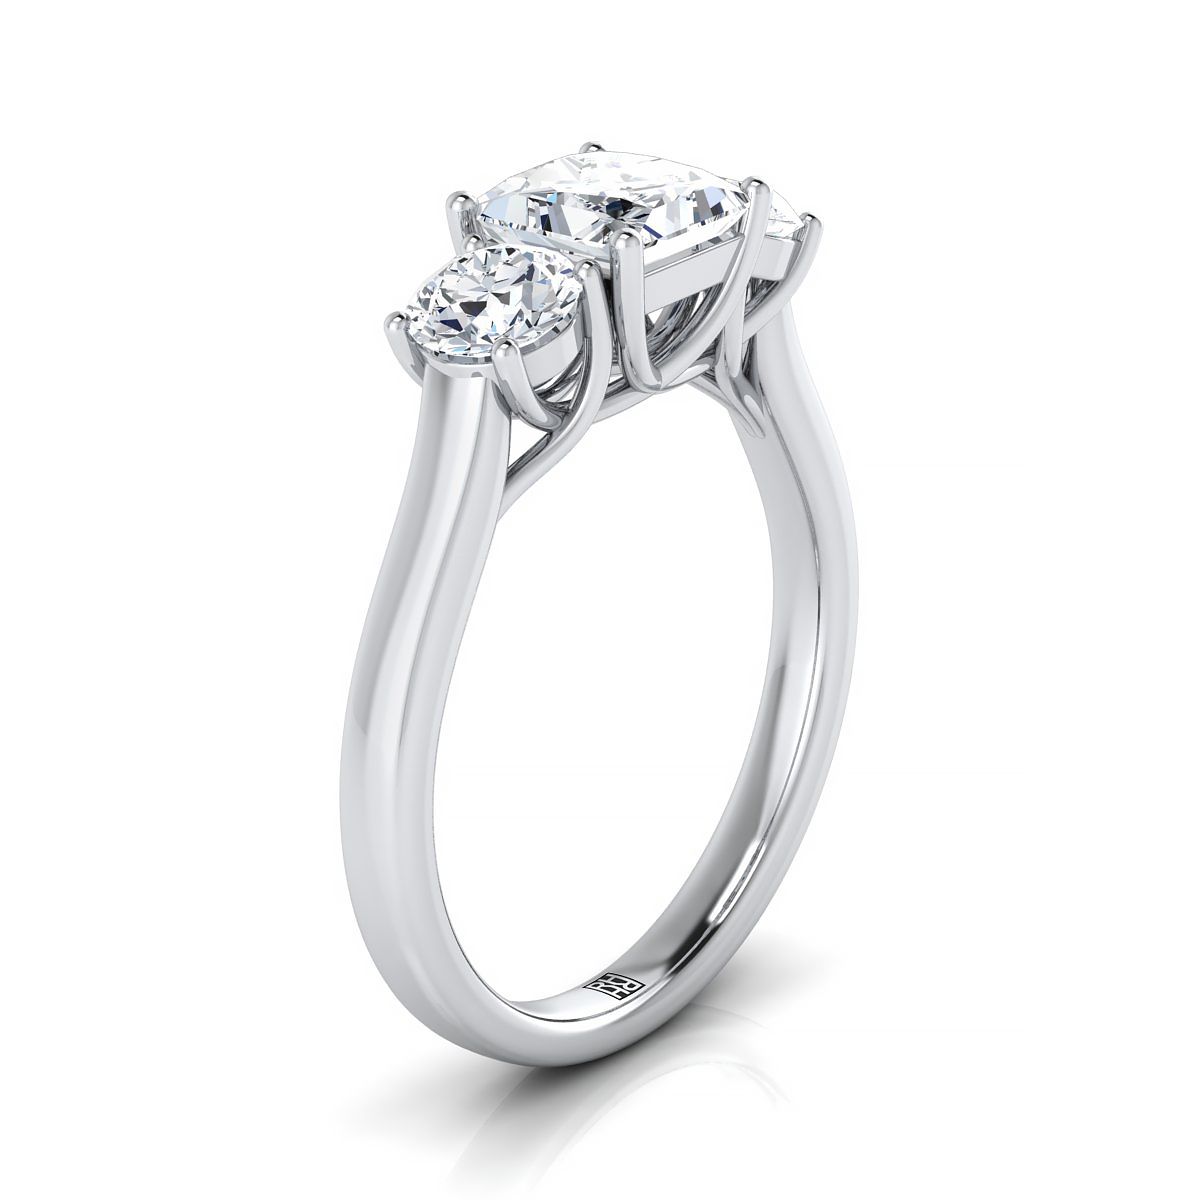 18K White Gold Princess Cut Classic Three Stone Diamond Engagement Ring -5/8ctw